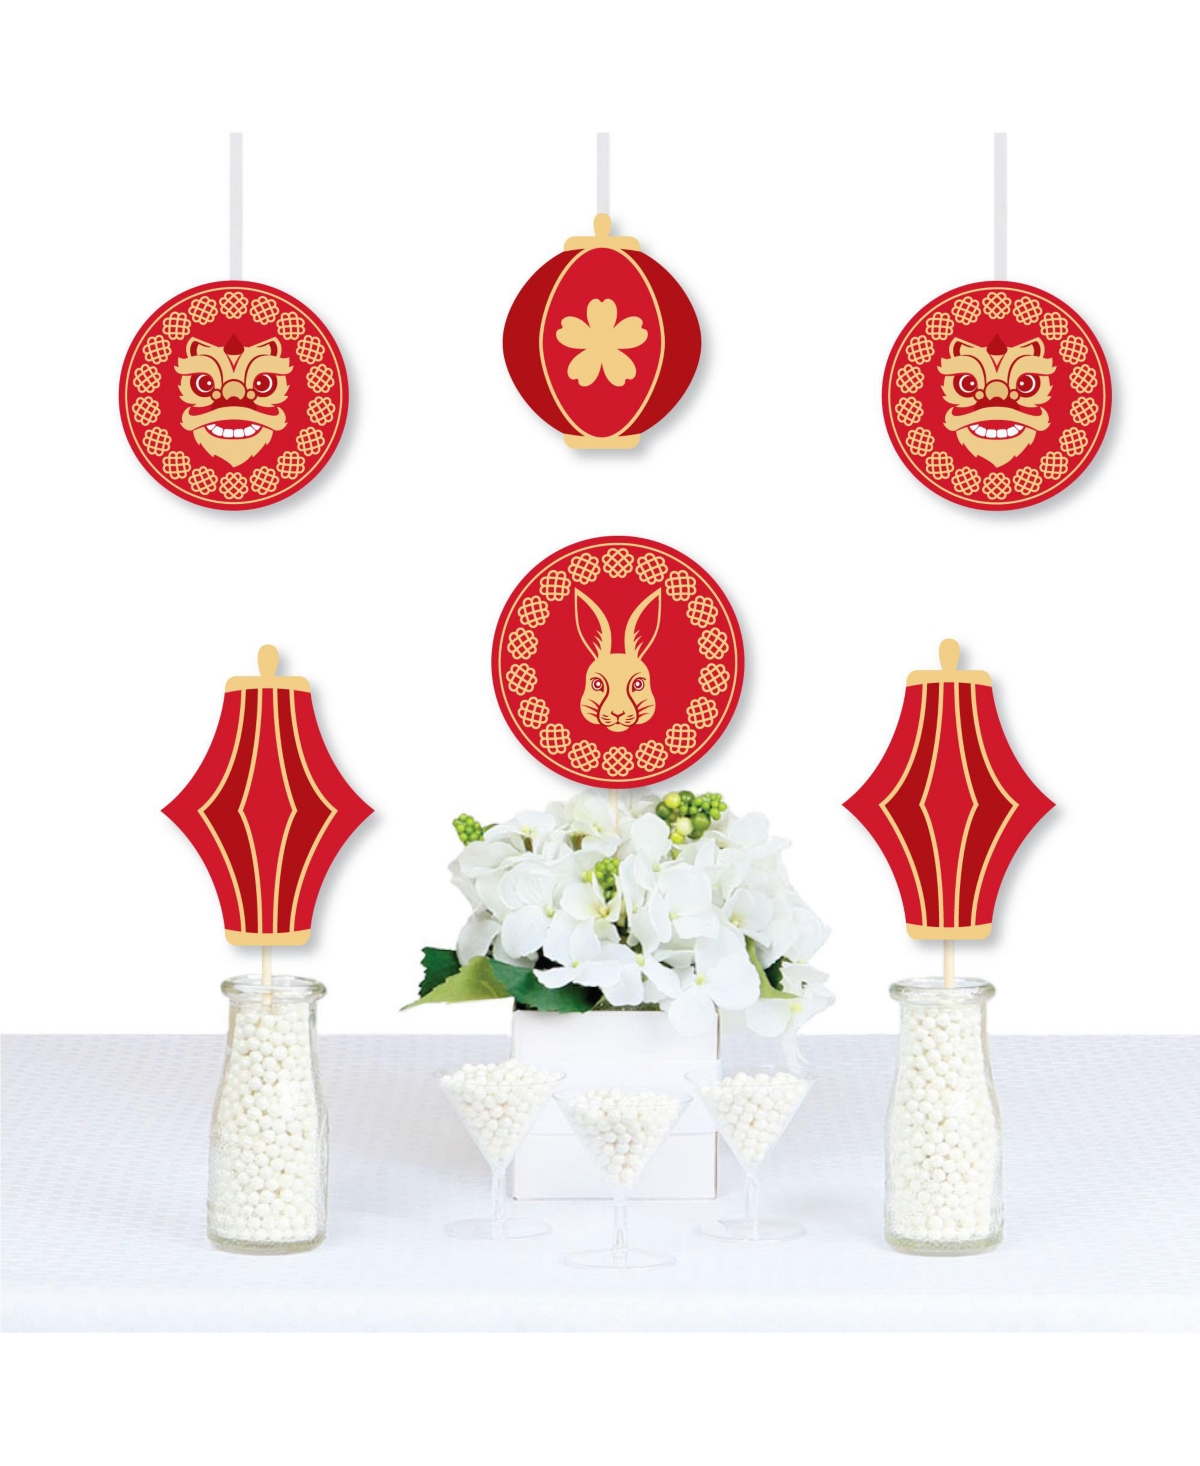 Lanterns - Lantern Decorations Diy 2023 Lunar New Year Essentials - Set of 20